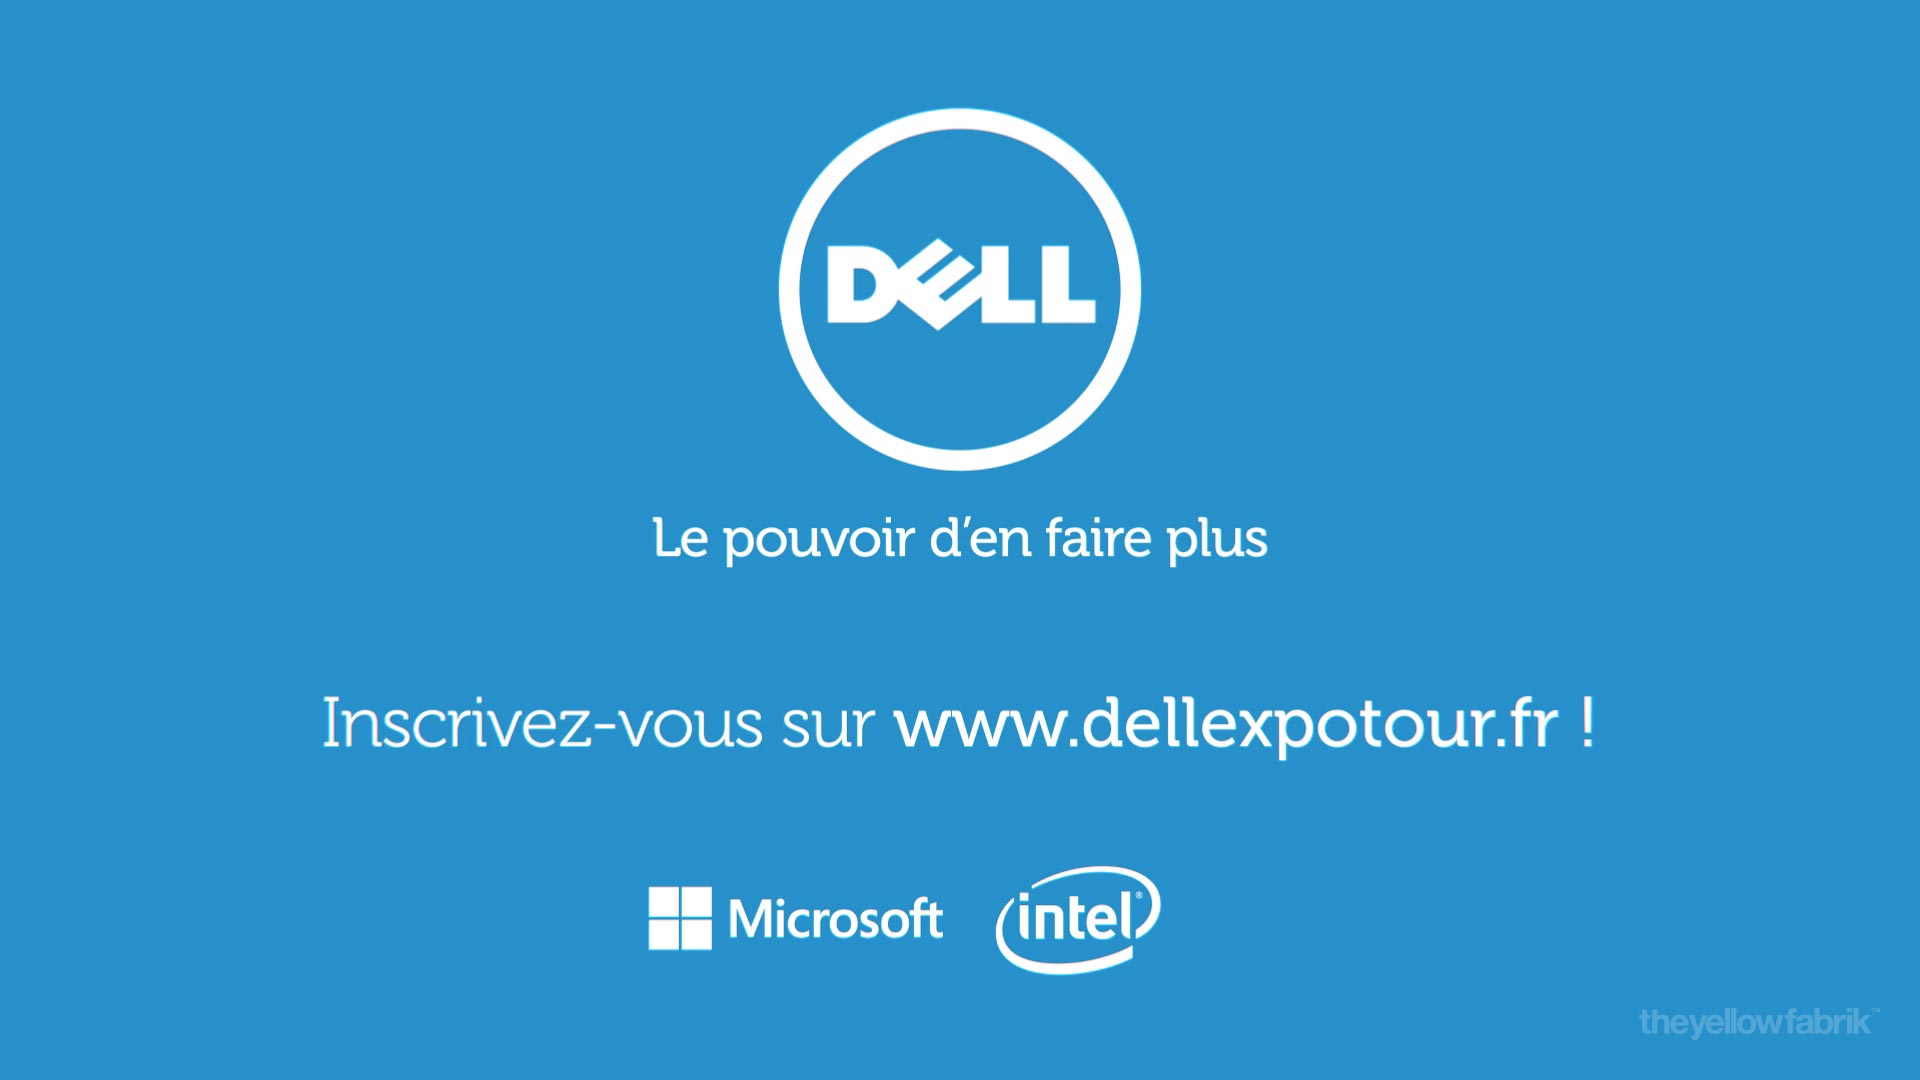 Dell Expo Tour by theyellowfabrik